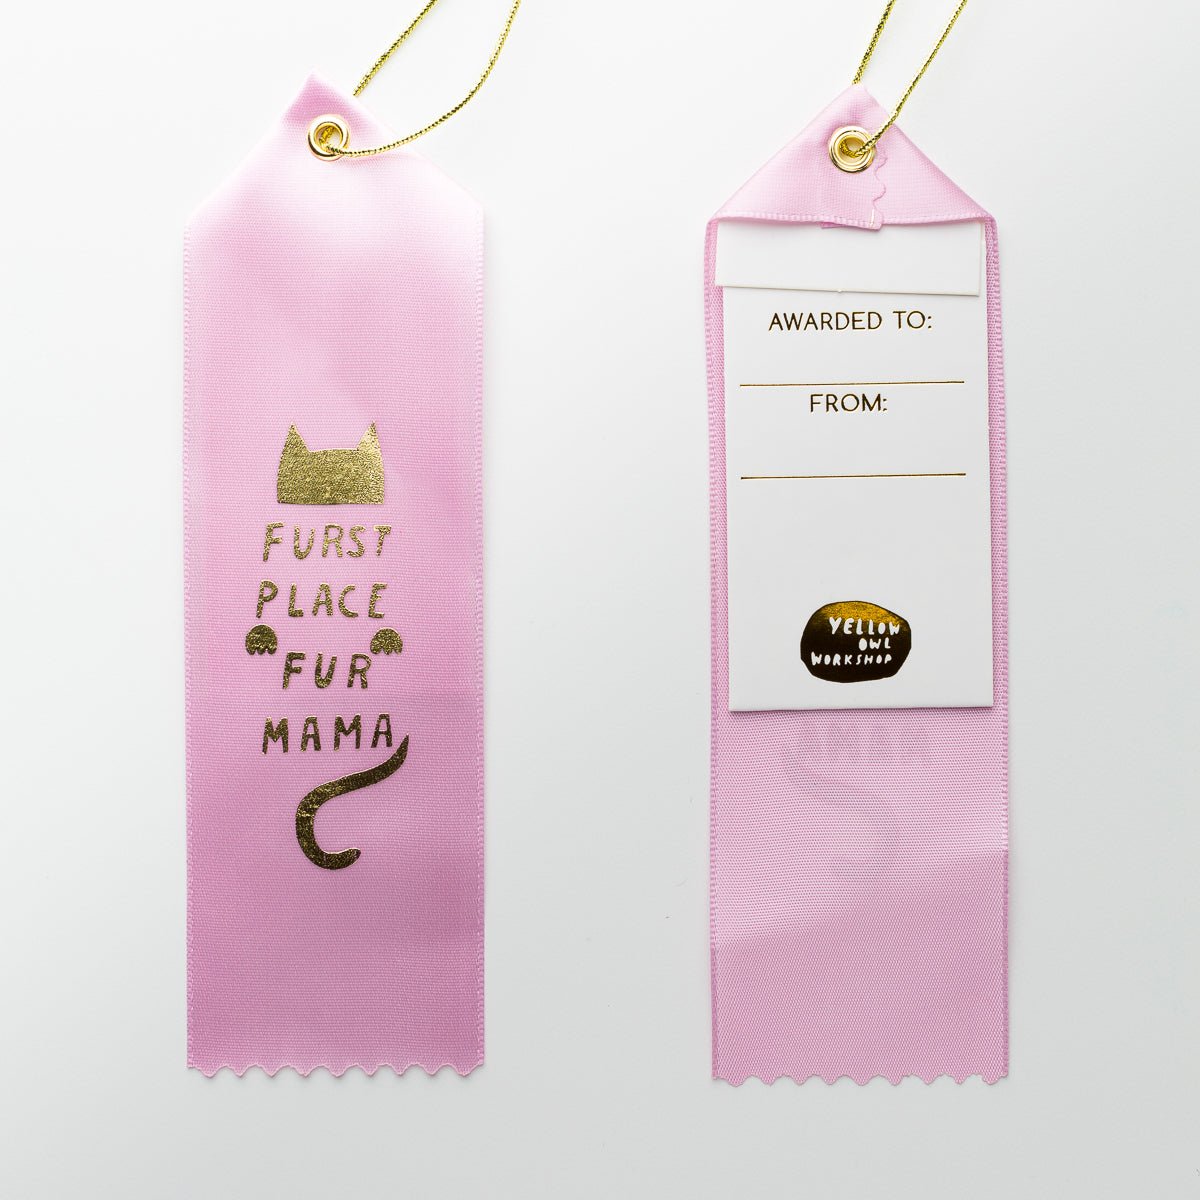 Furst Place Fur Mama - Award Ribbon Card - Yellow Owl Workshop